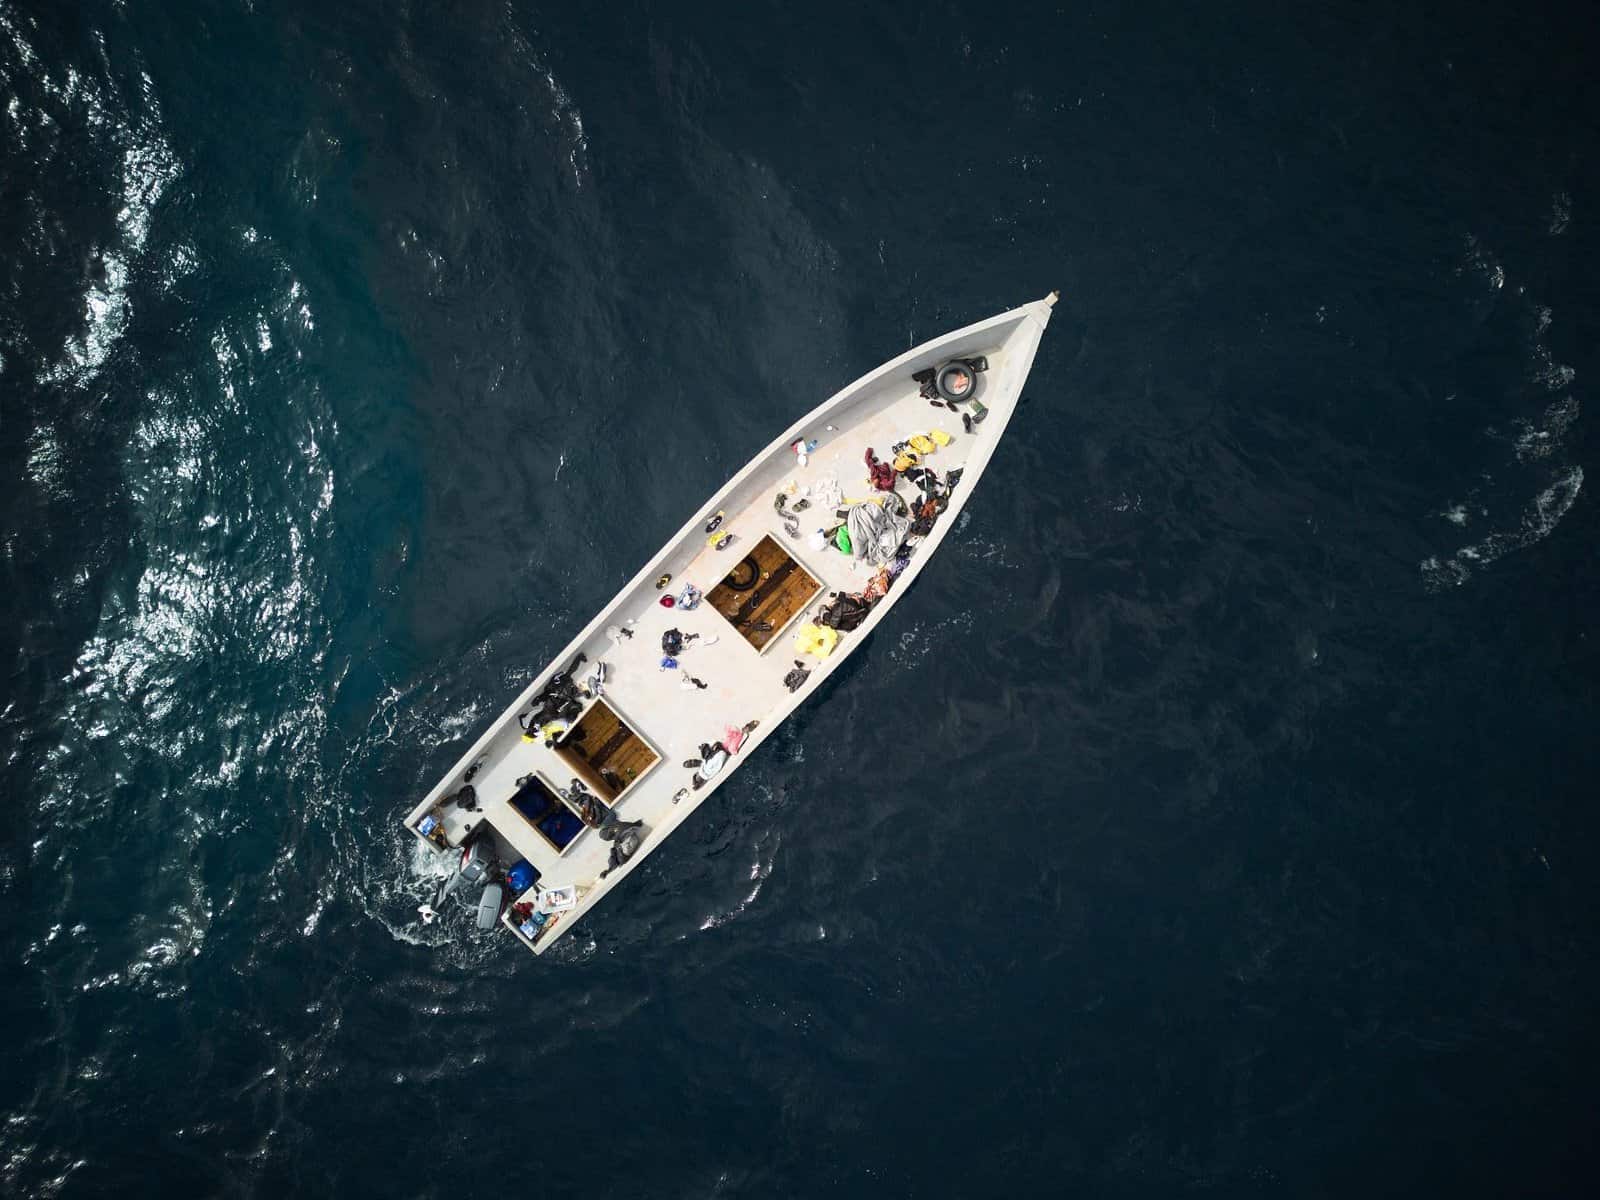 Resqship-Nadir-Einsatz-leeres-Holzboot-Drohnenfoto